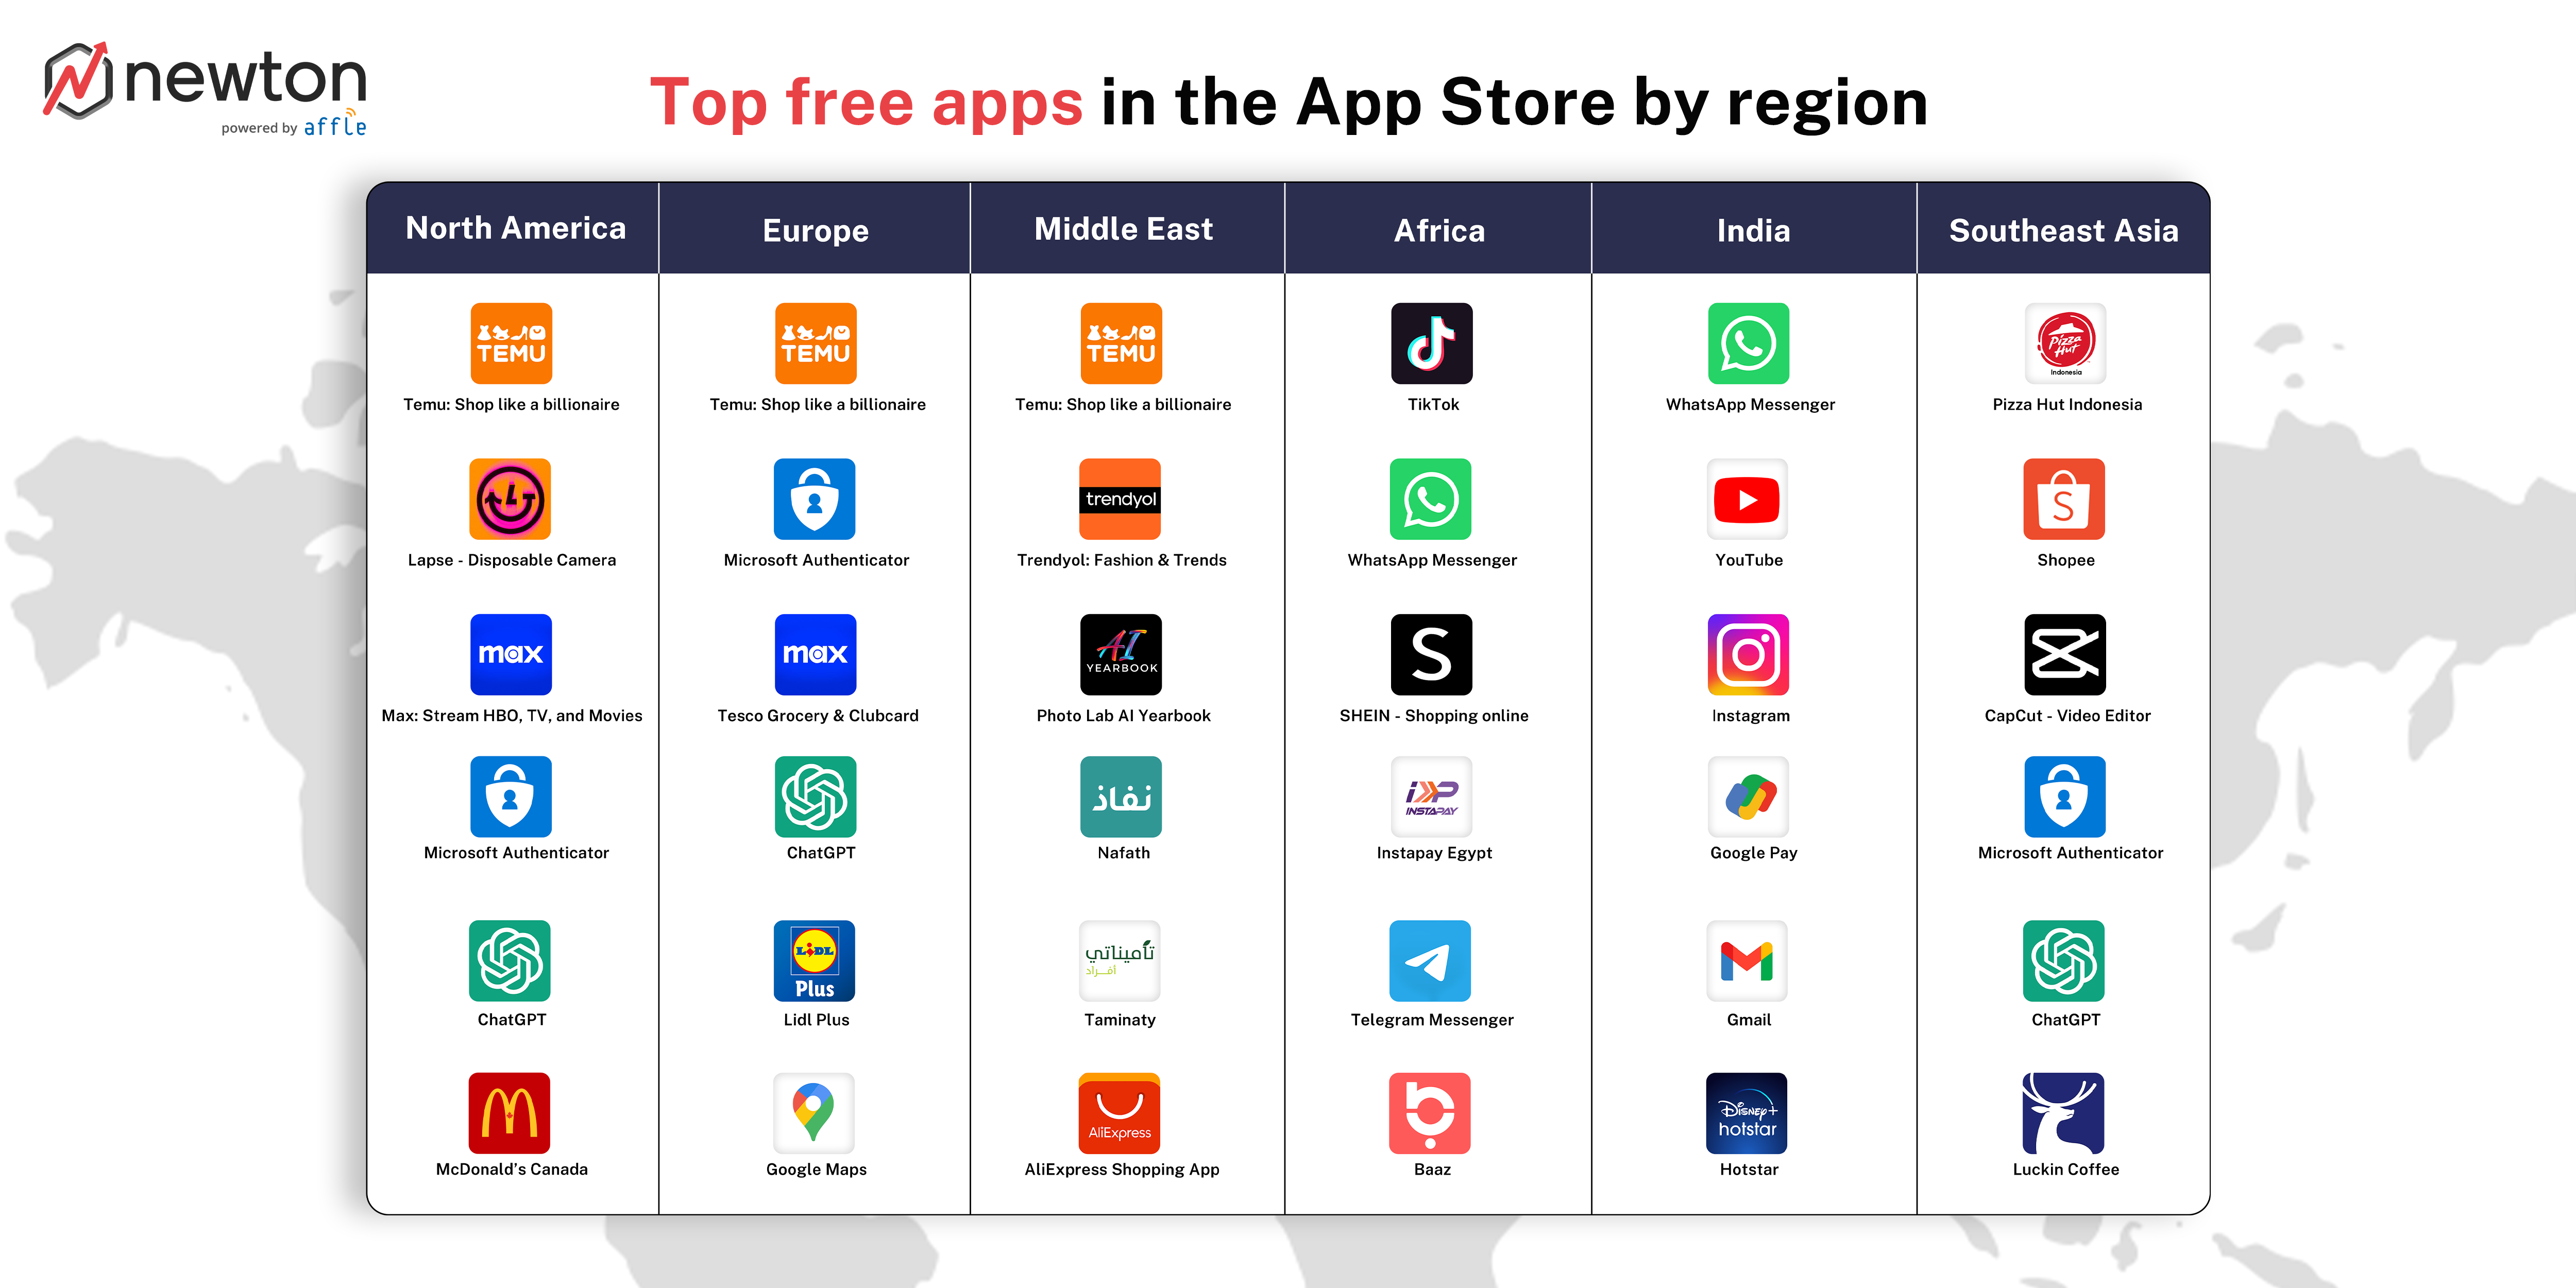 Apple-search-ads-festive-season-user-acquisition-top-apps-by-region